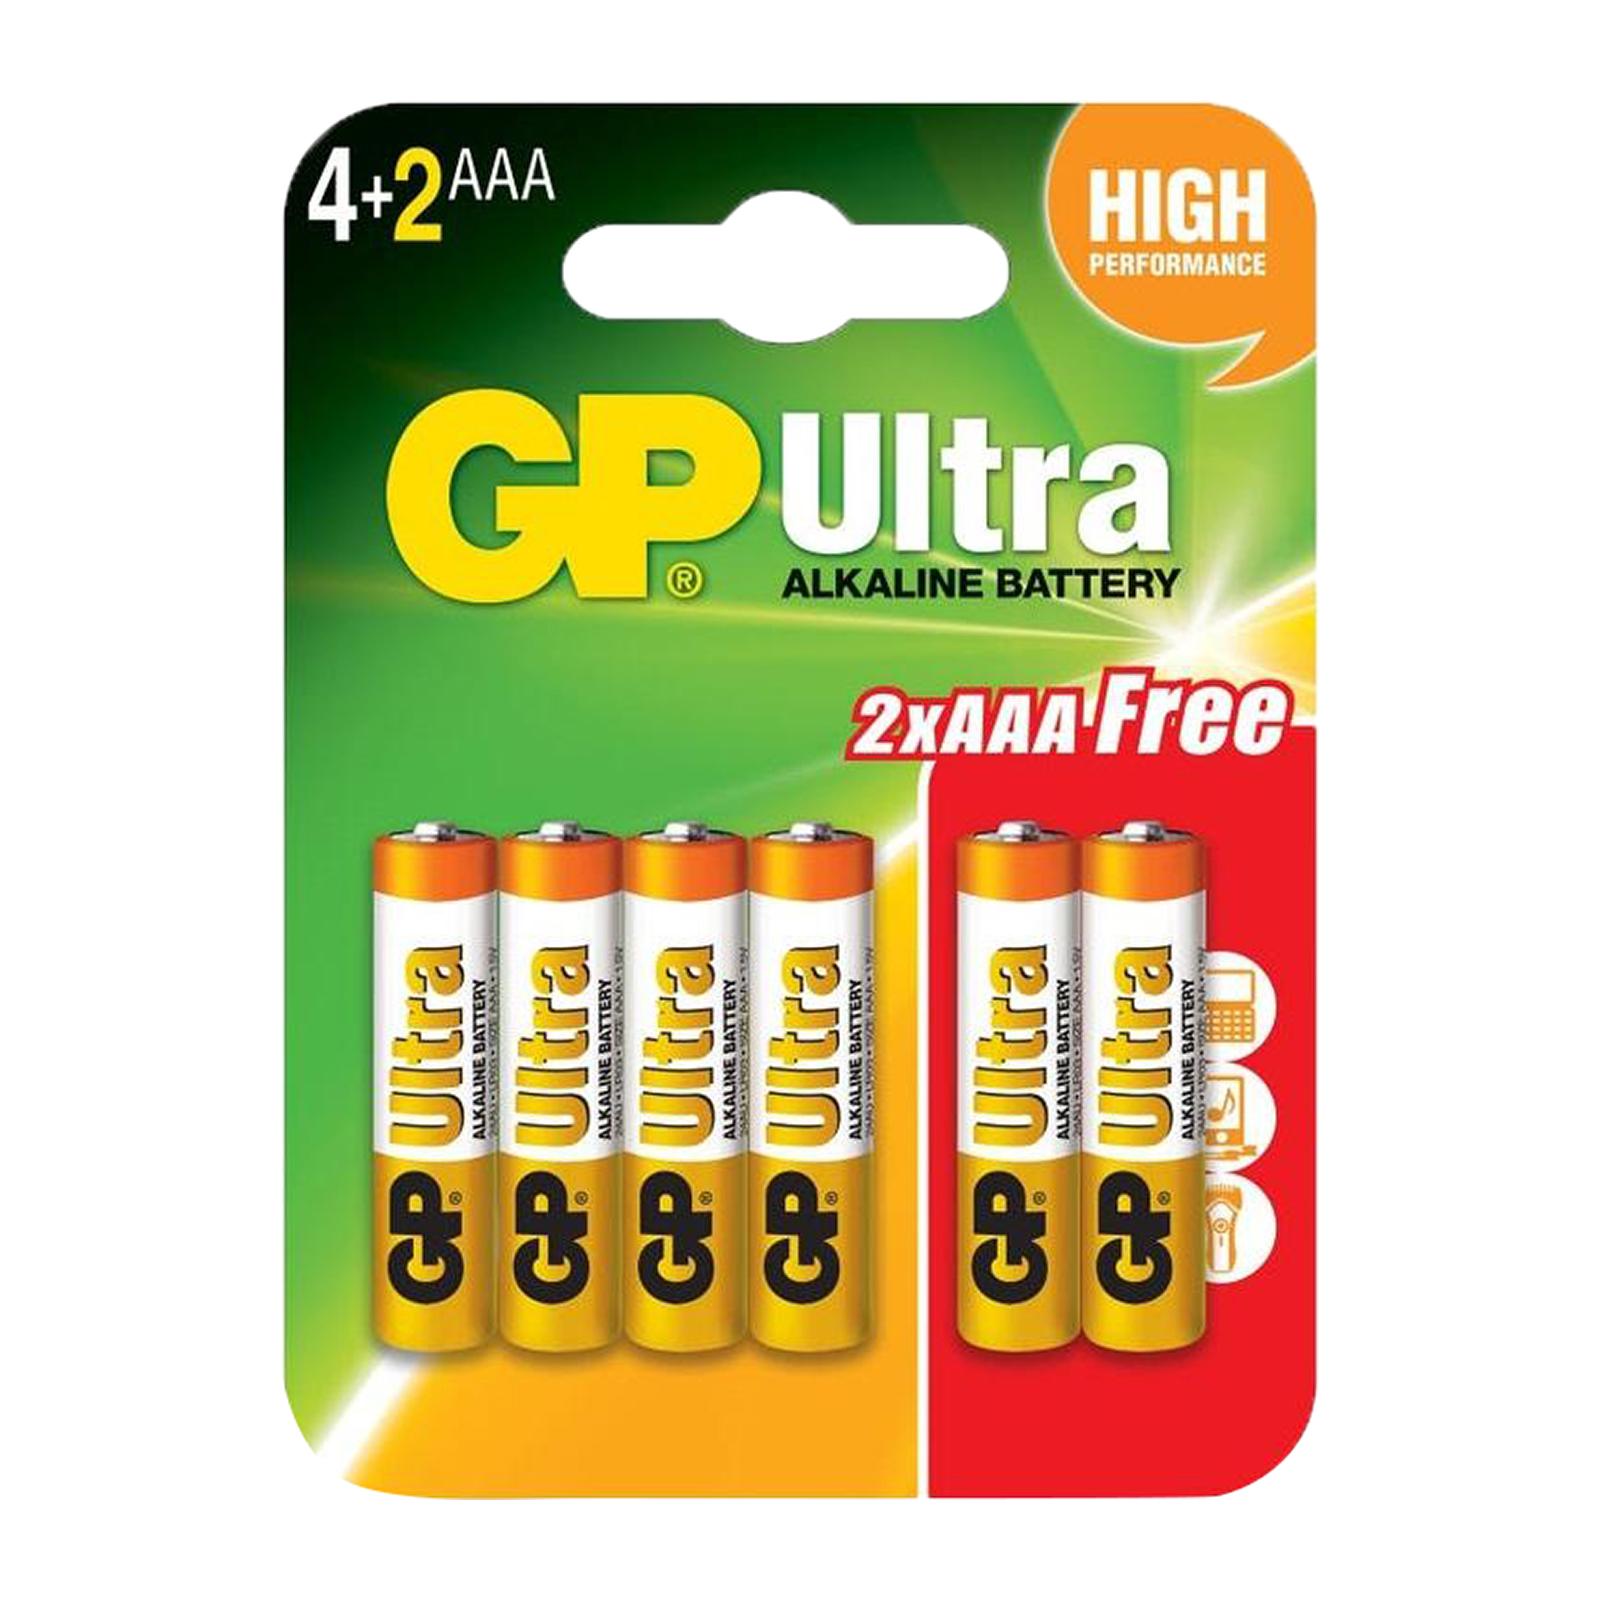 Батарейки Alkaline AAA. Батарейка GP Ultra 24au4/2-2cr6 AAA 1,5 В, 6шт/упак. Power Ultra Alkaline. Подойдут ли аккумуляторы GP Ultra к радиоприемнику Смик кк9.